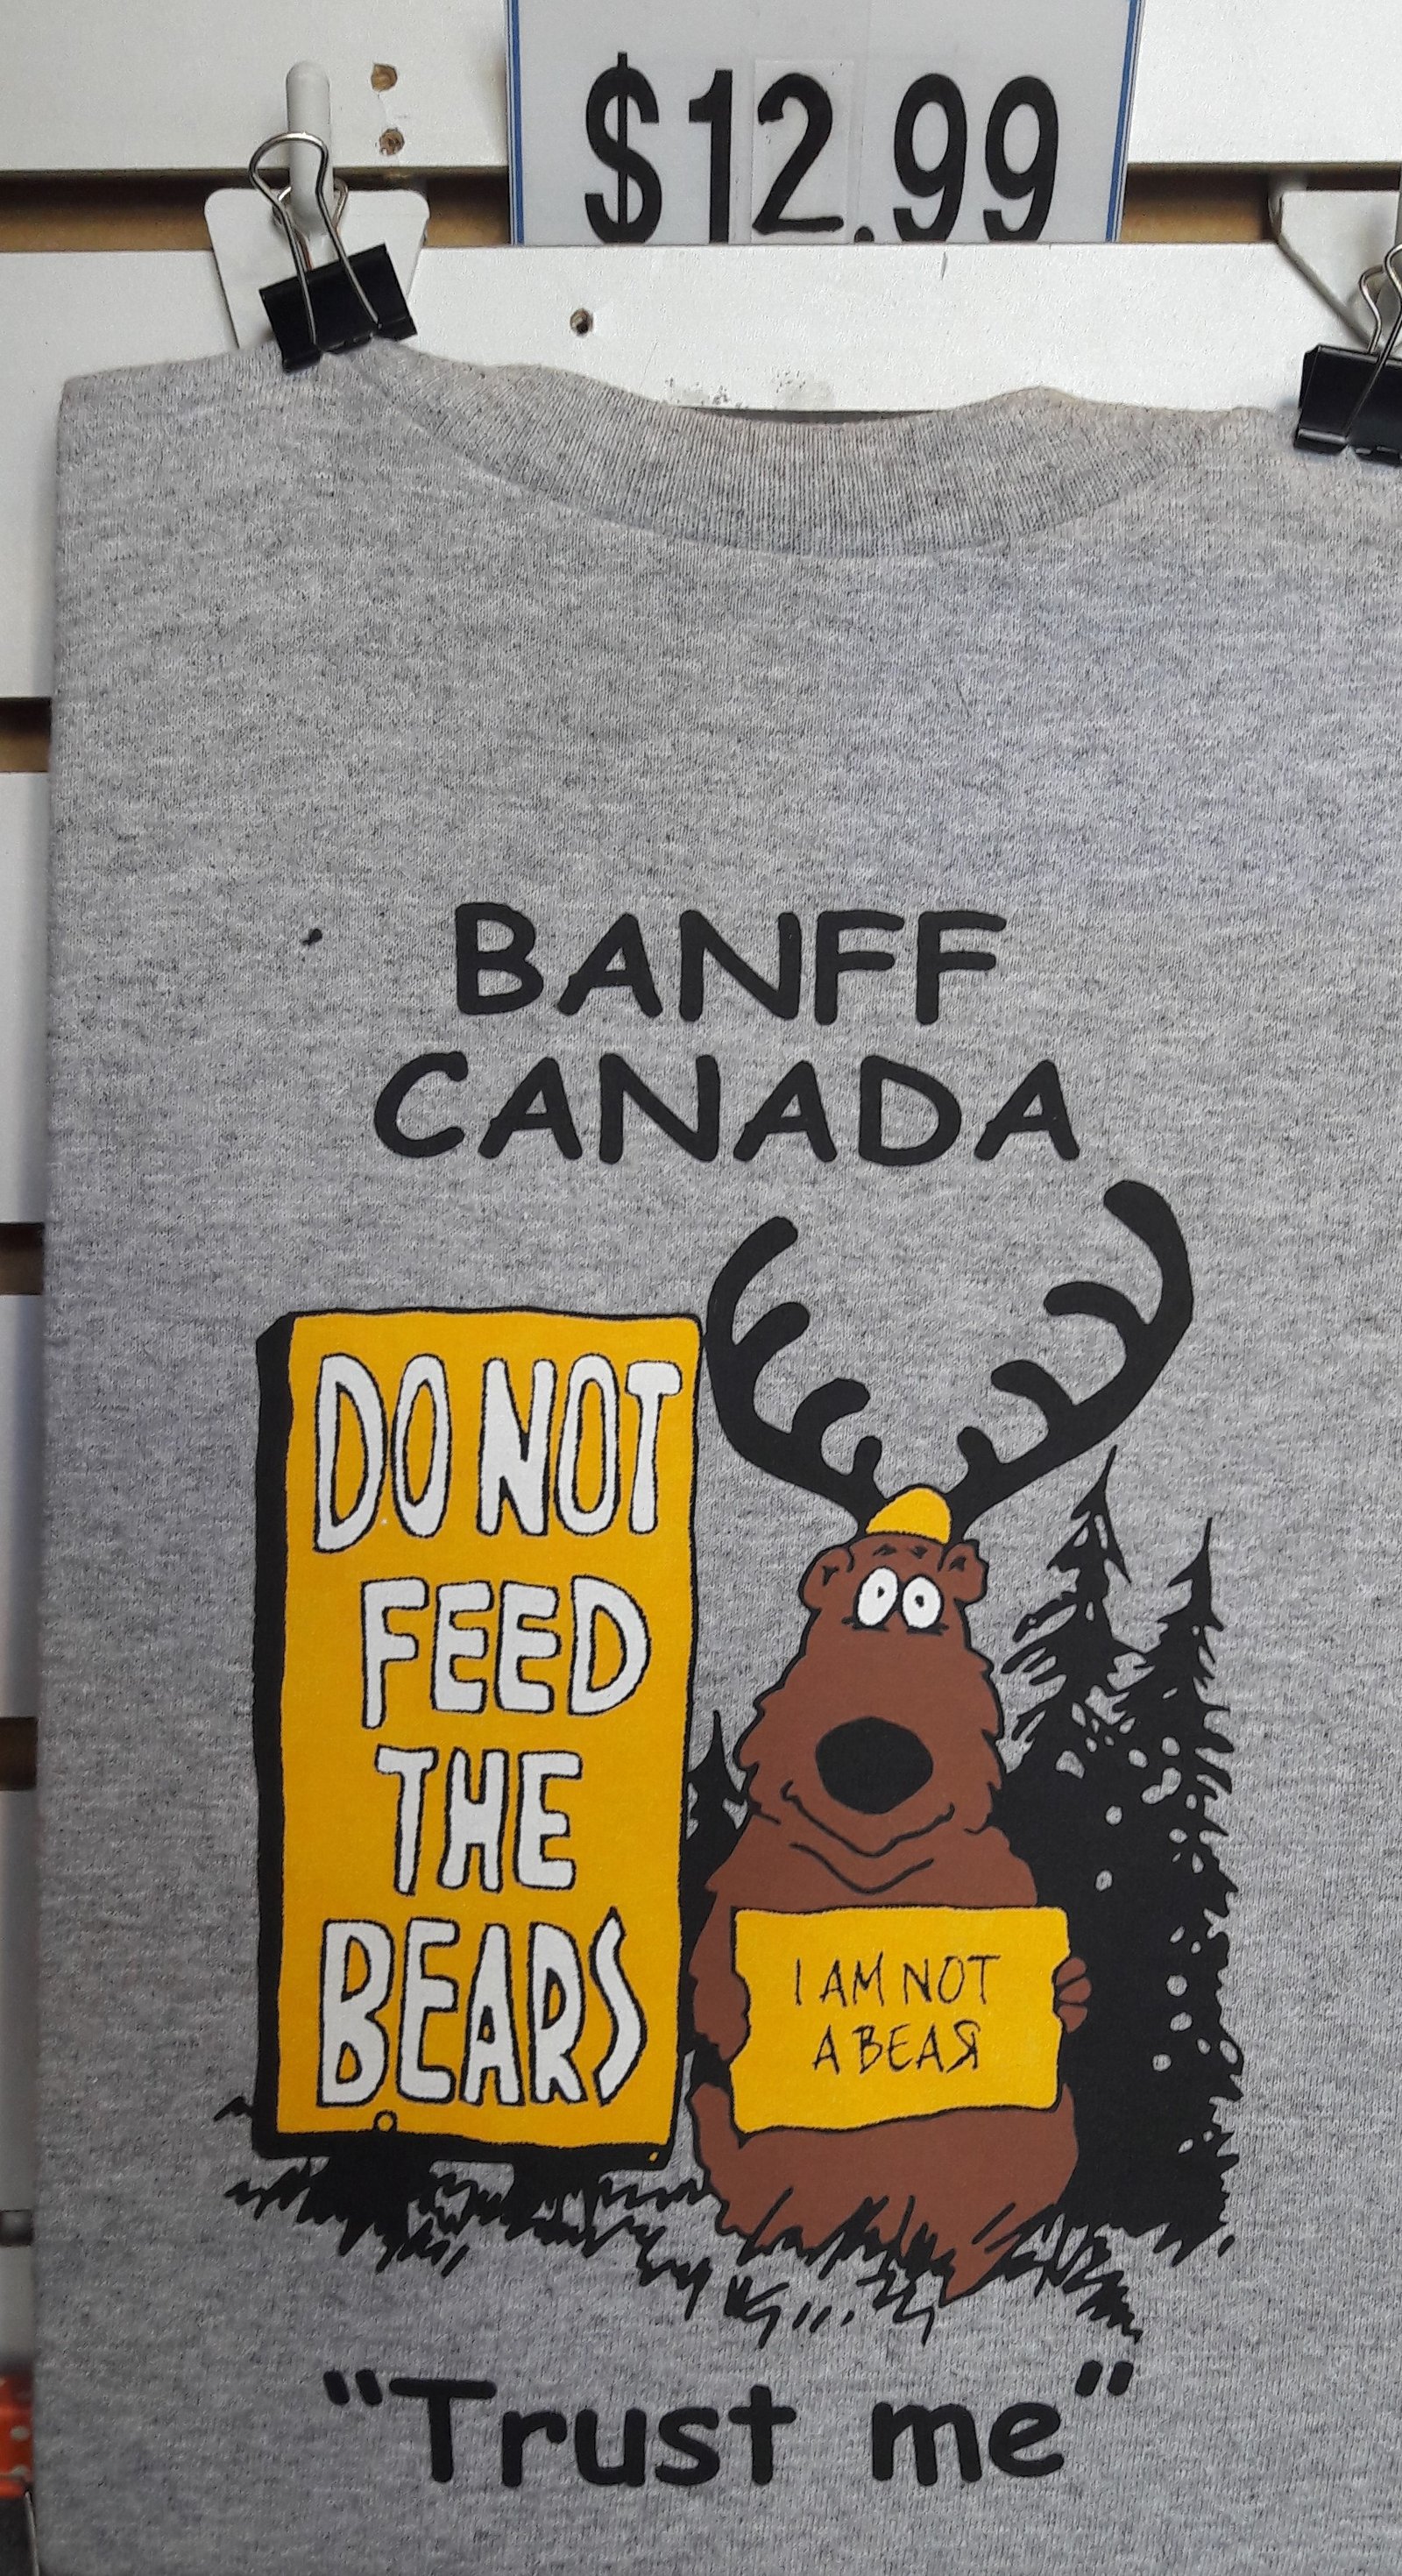 Banff Canada souvenirs